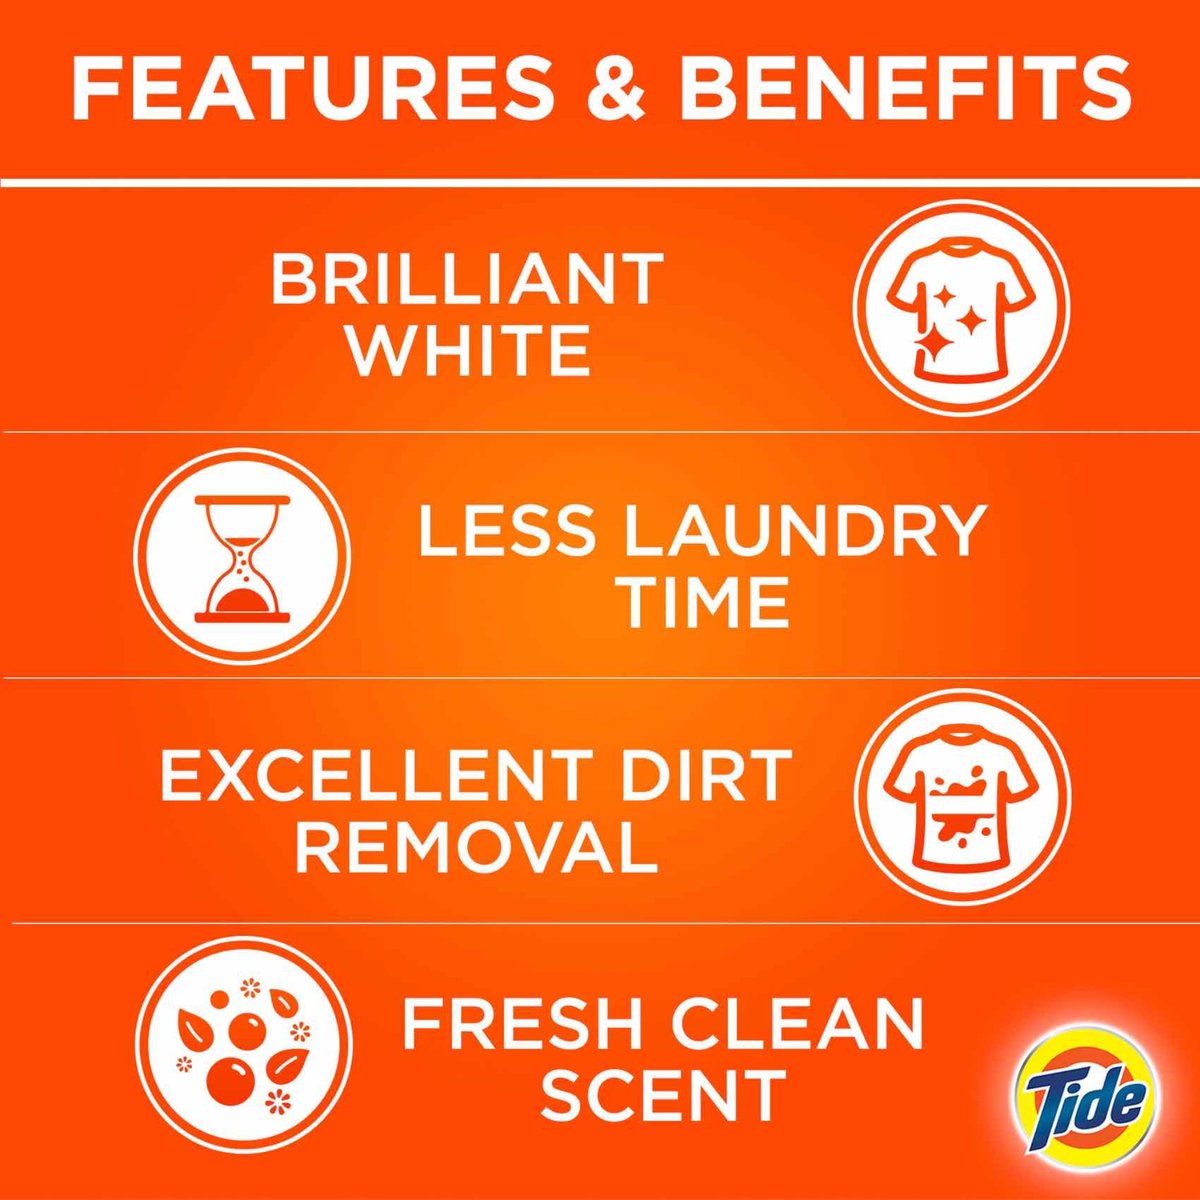 Tide Semi-Automatic Laundry Detergent Powder, Original Scent, 2 x 7.5 kg